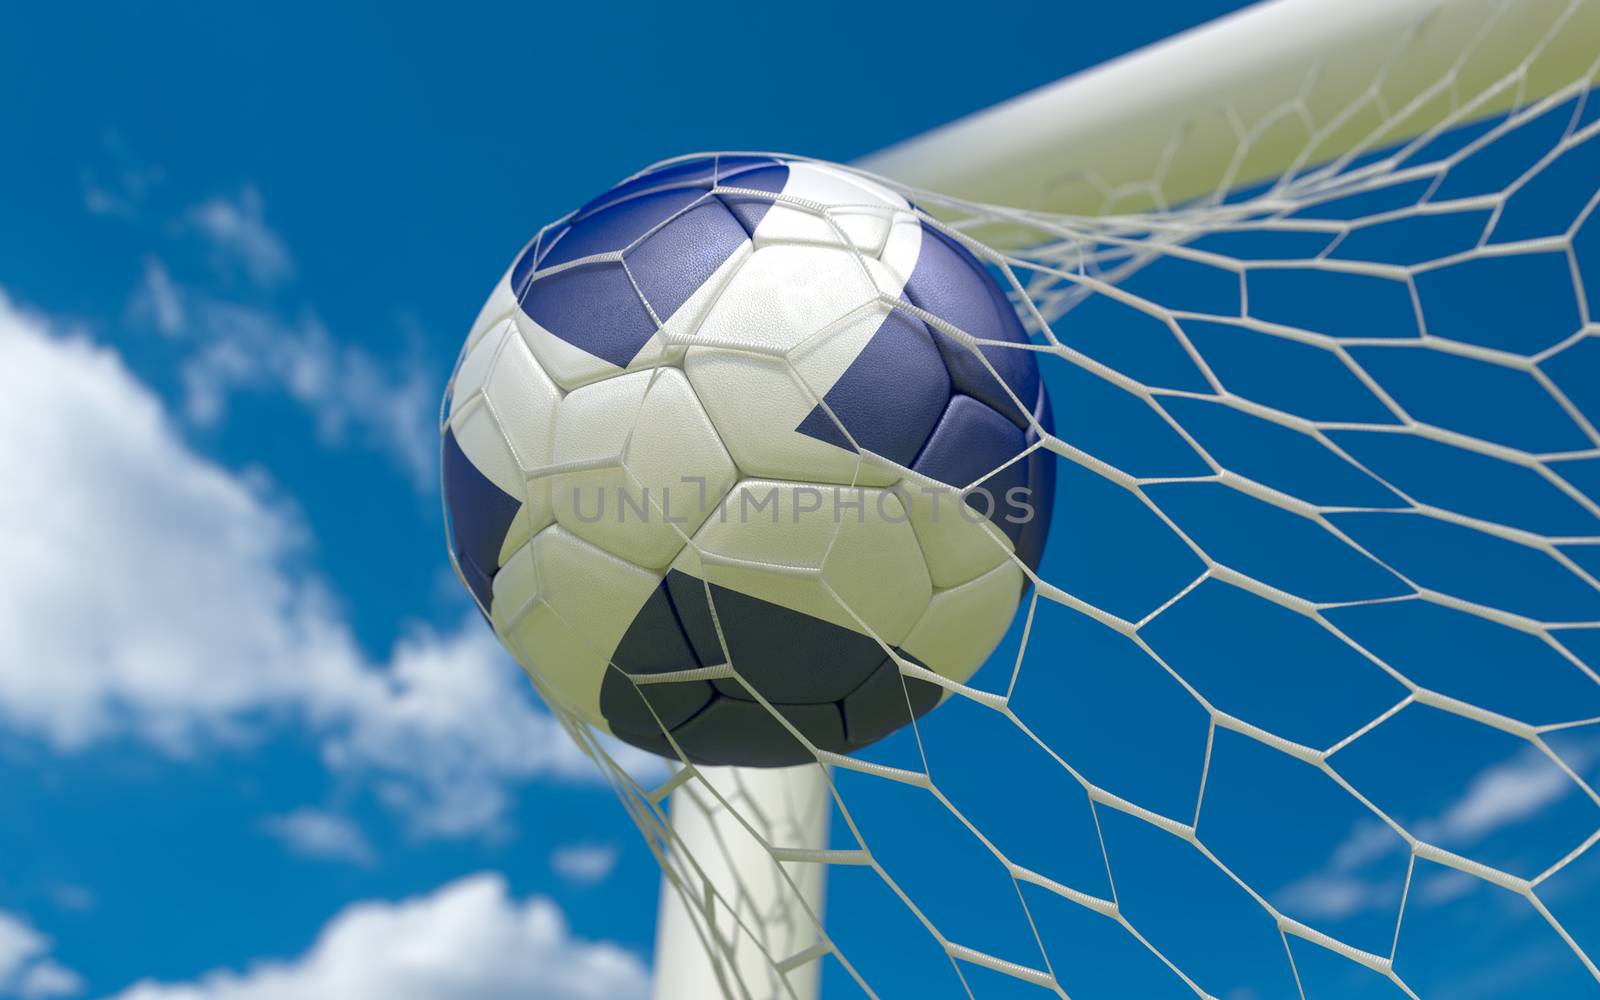 Scotland flag and soccer ball, football in goal net